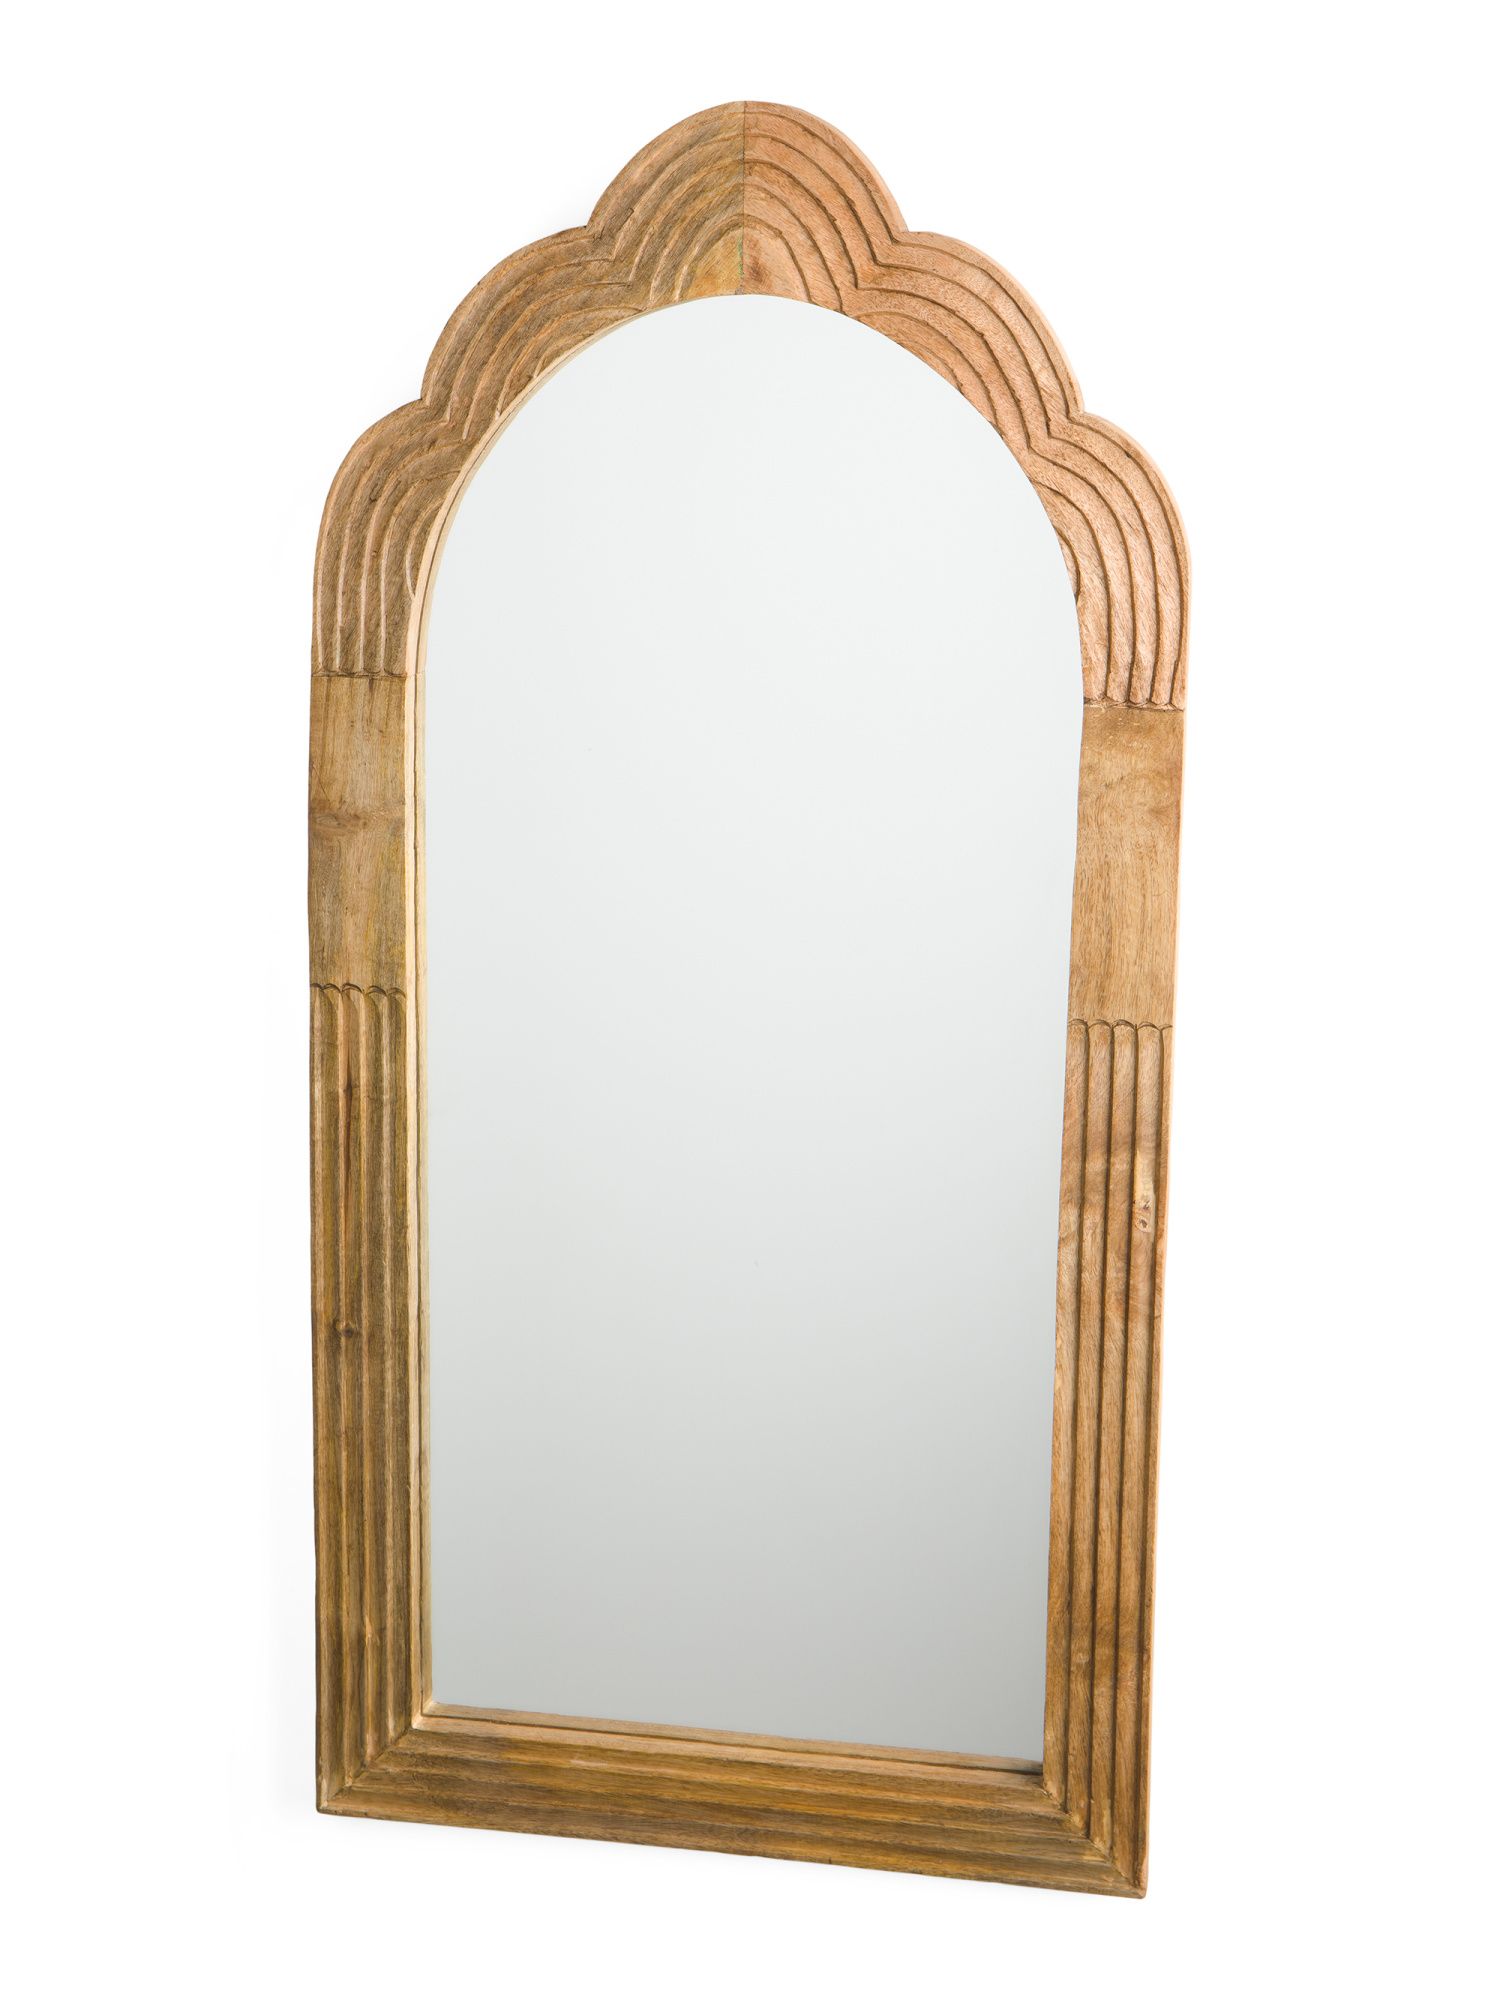 Wooden Arch Mirror | TJ Maxx